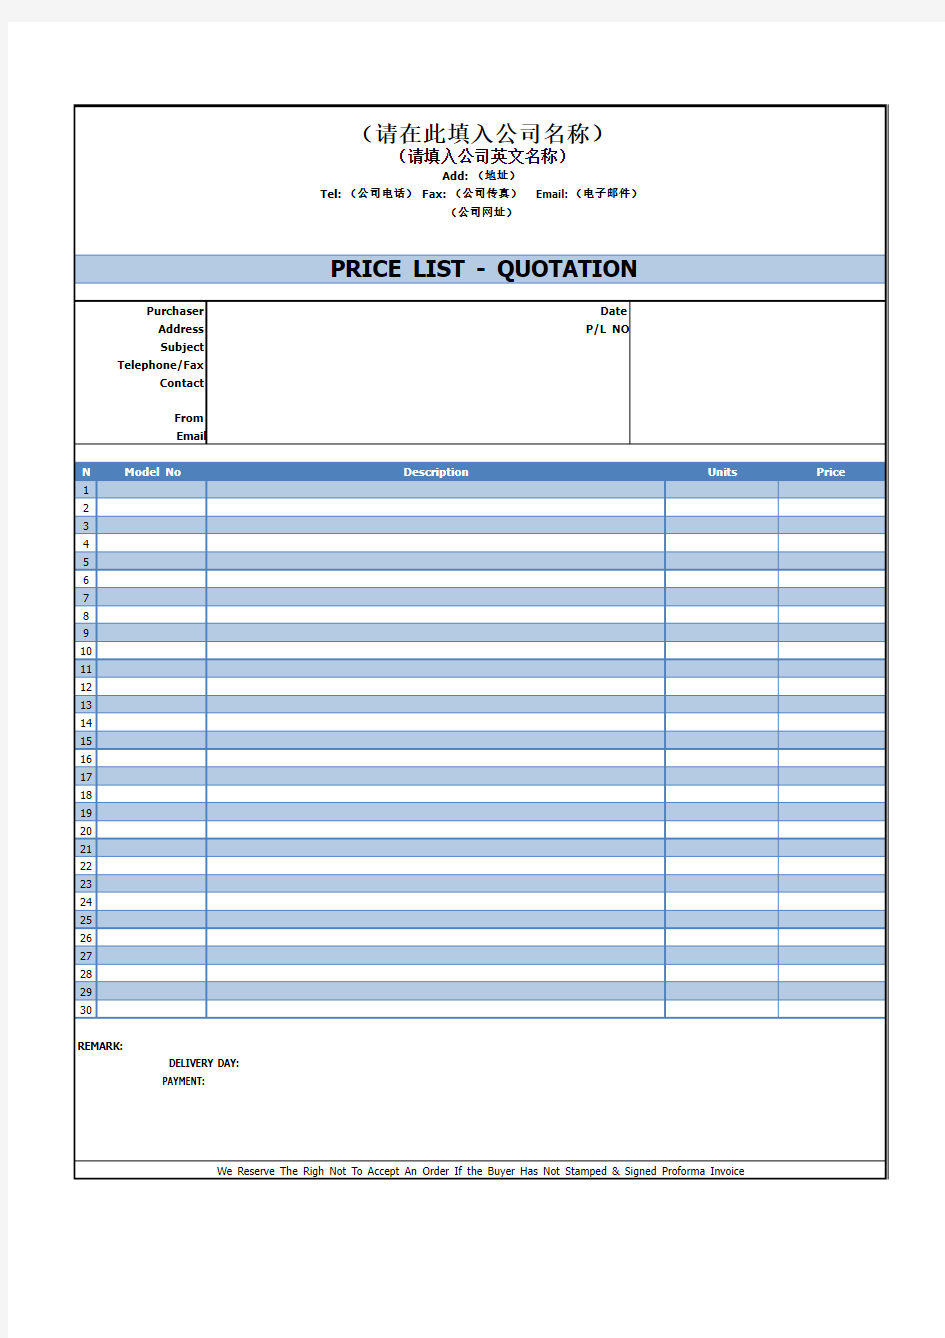 PRICE LIST - QUOTATION(报价单模板)